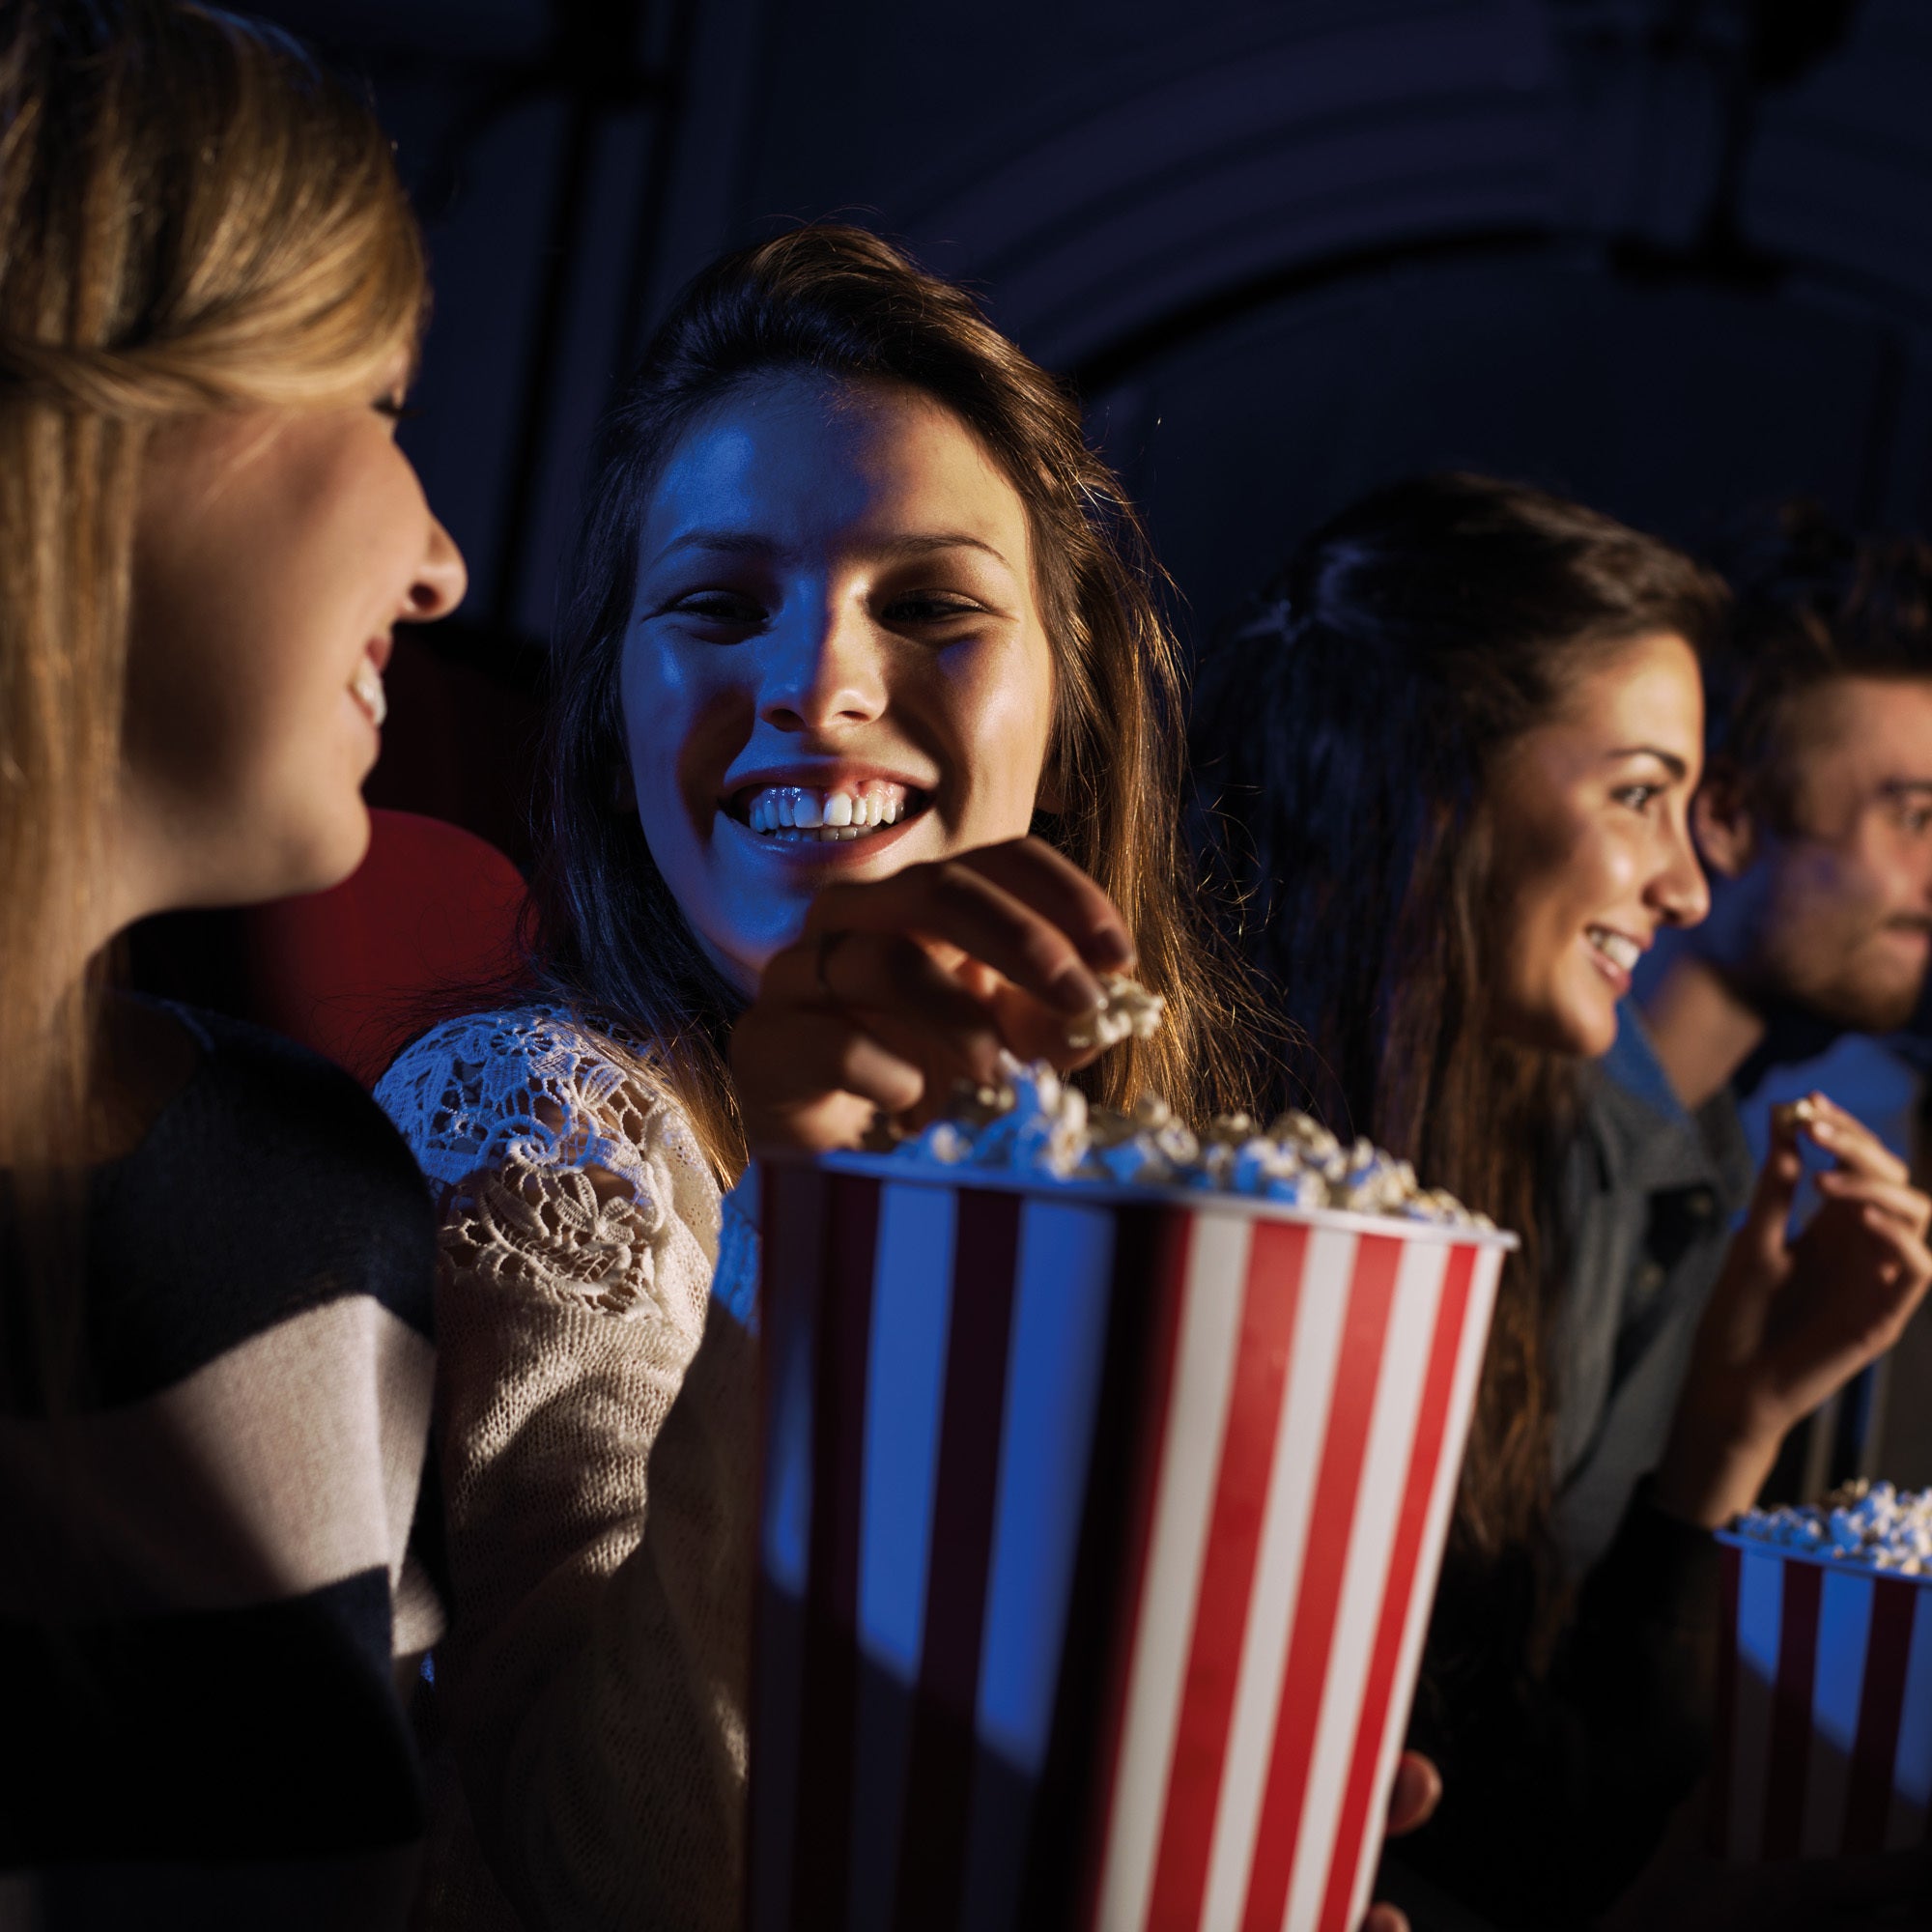 44oz Cinema-Style Popcorn Tubs